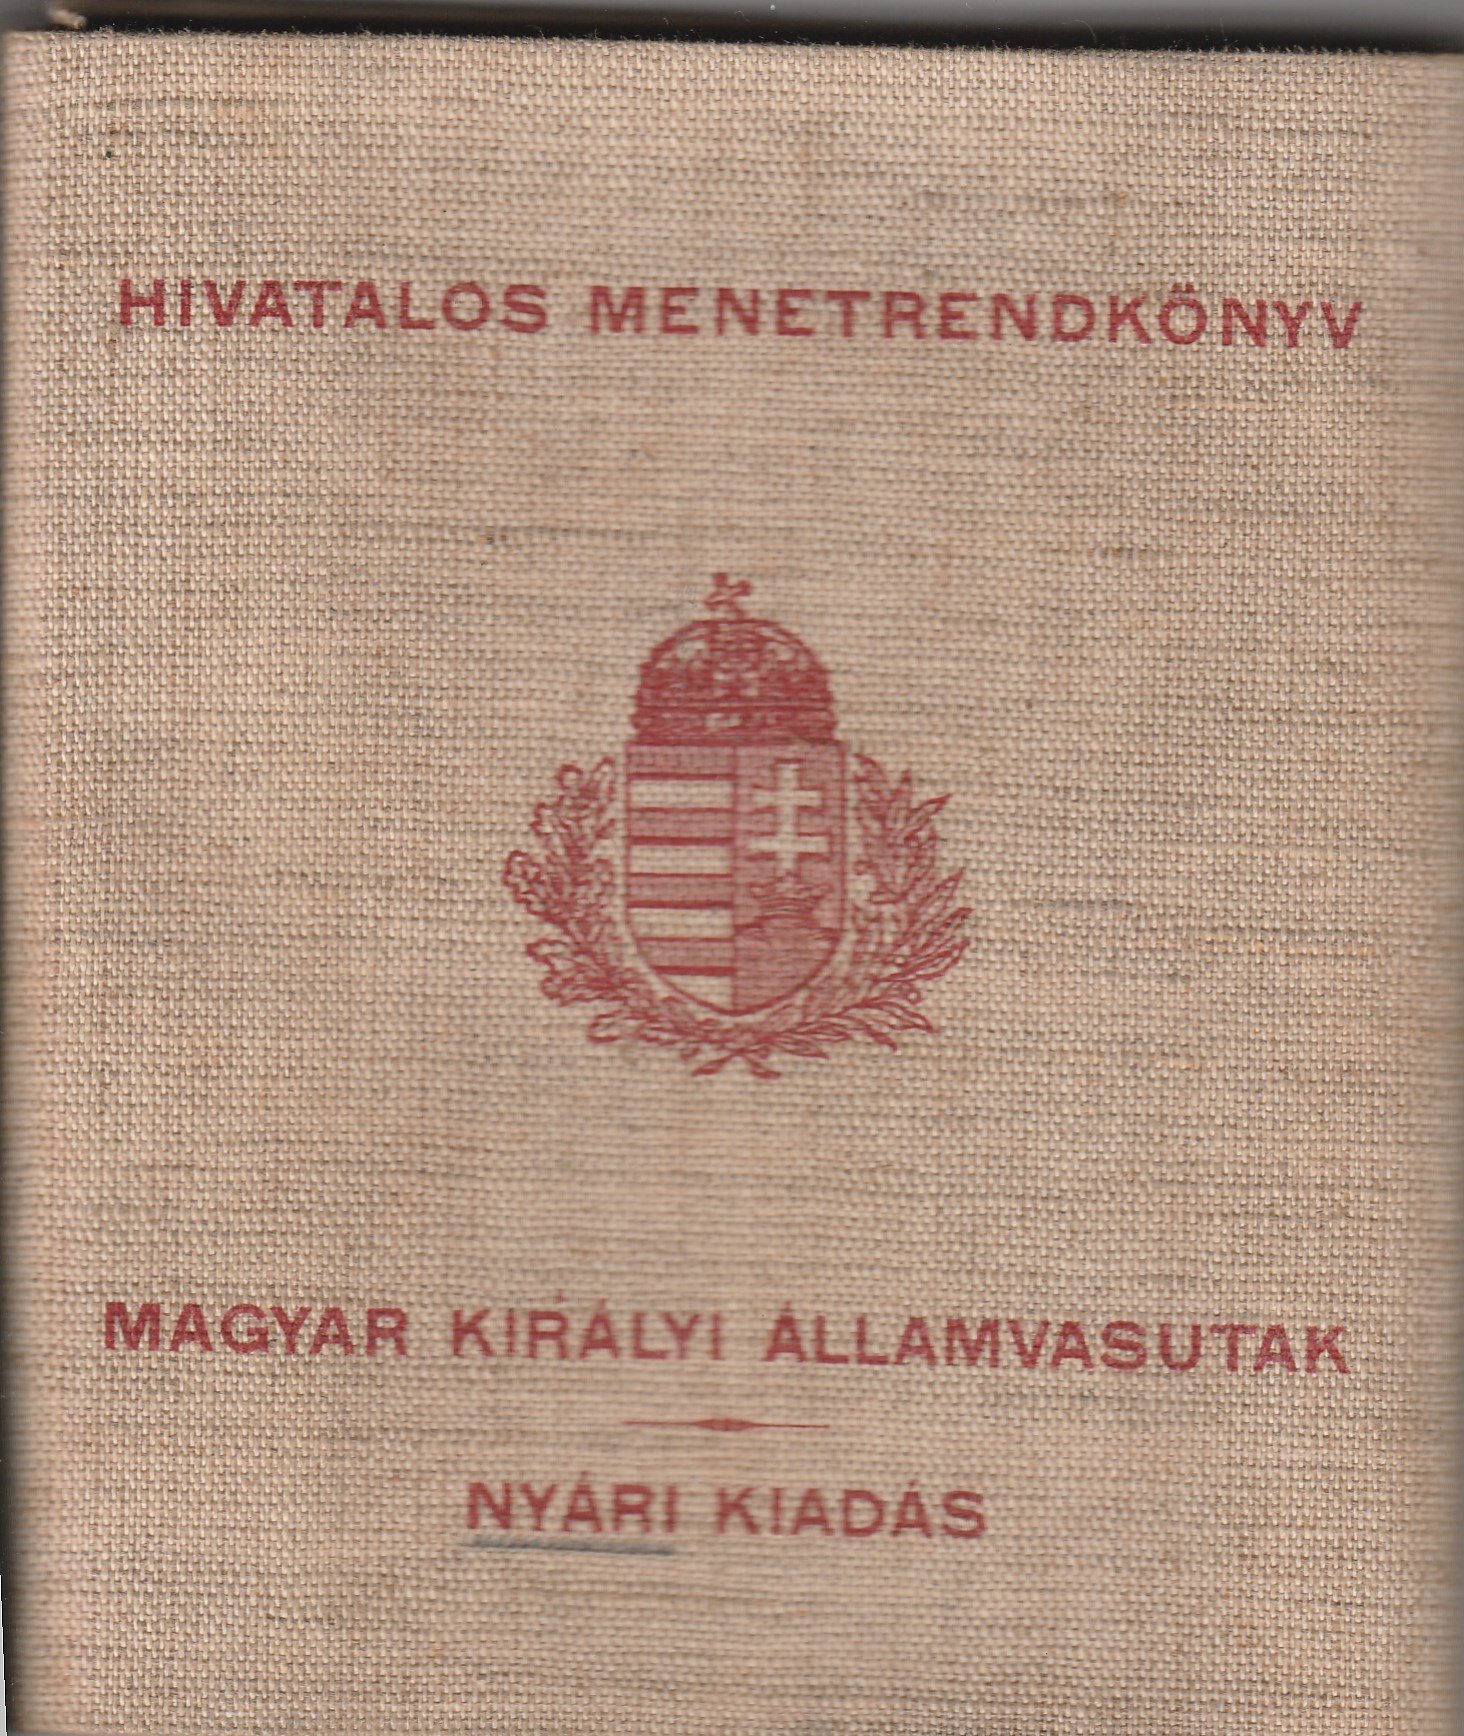 Menetrendkönyv borítója (Tapolcai Városi Múzeum CC BY-NC-SA)